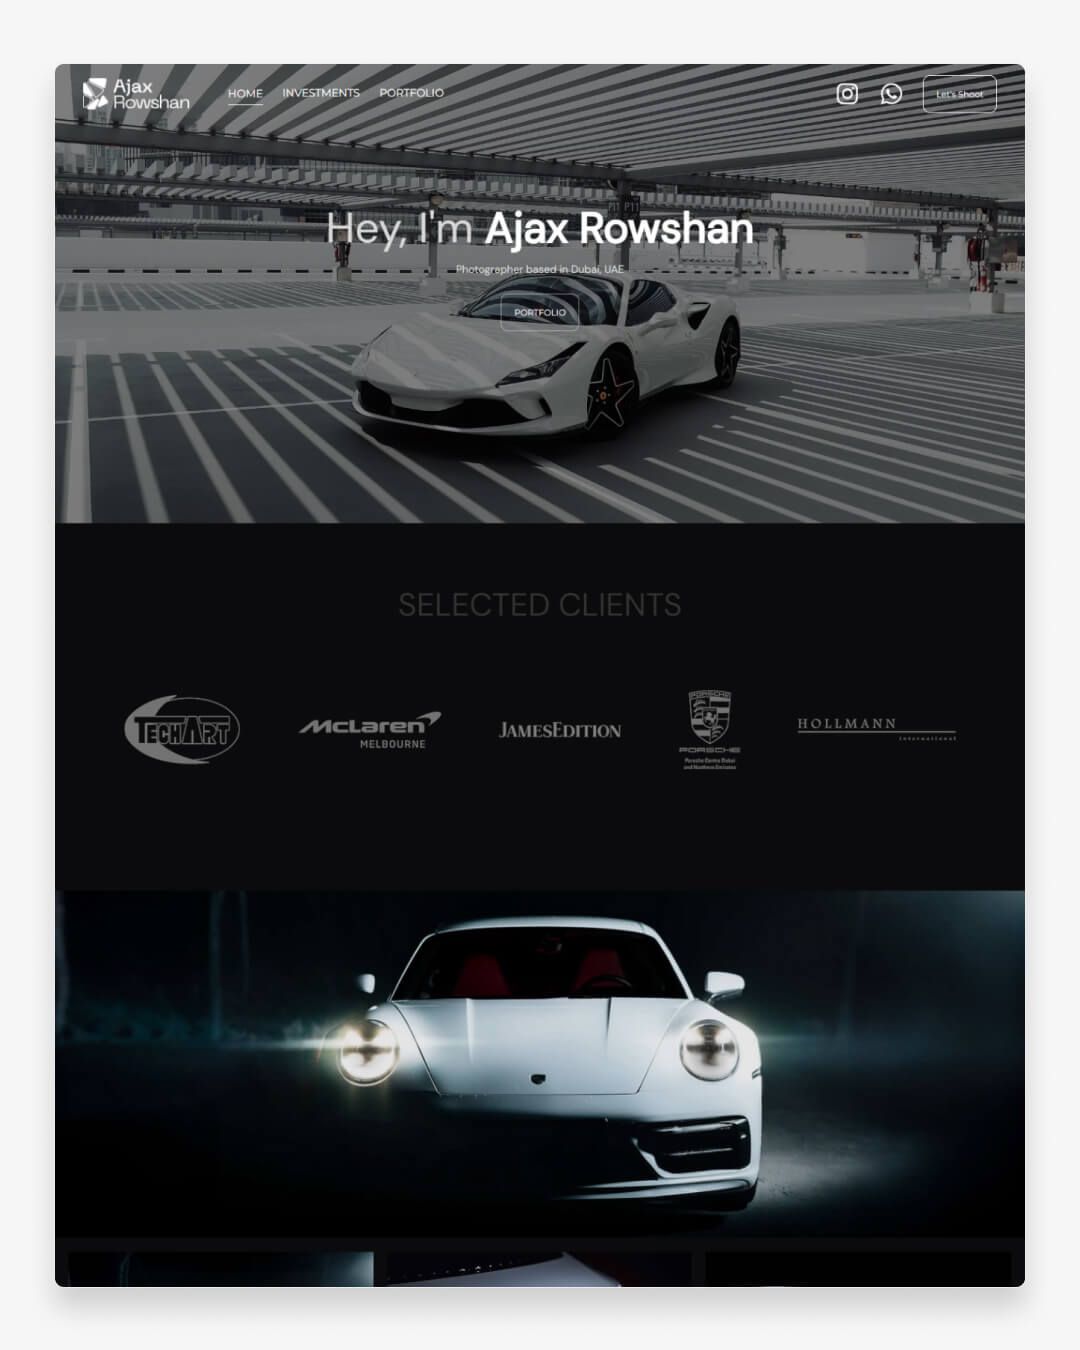 Ajax Rowshan Portfolio website with Car images